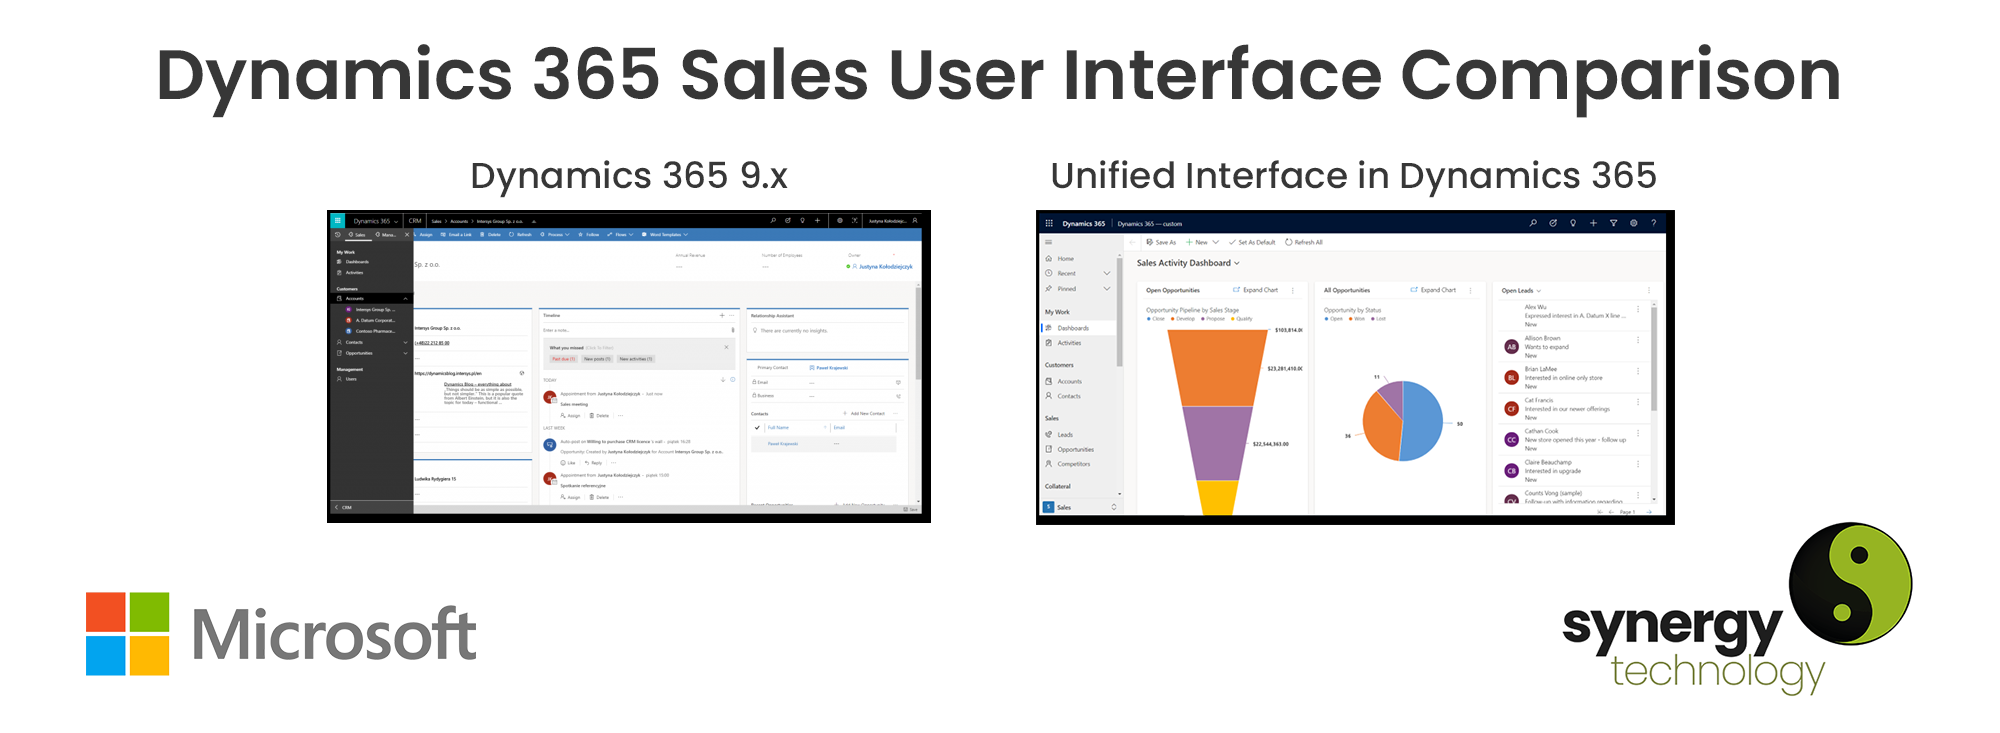 Dynamics 365 Sales-User Interface Comparison 